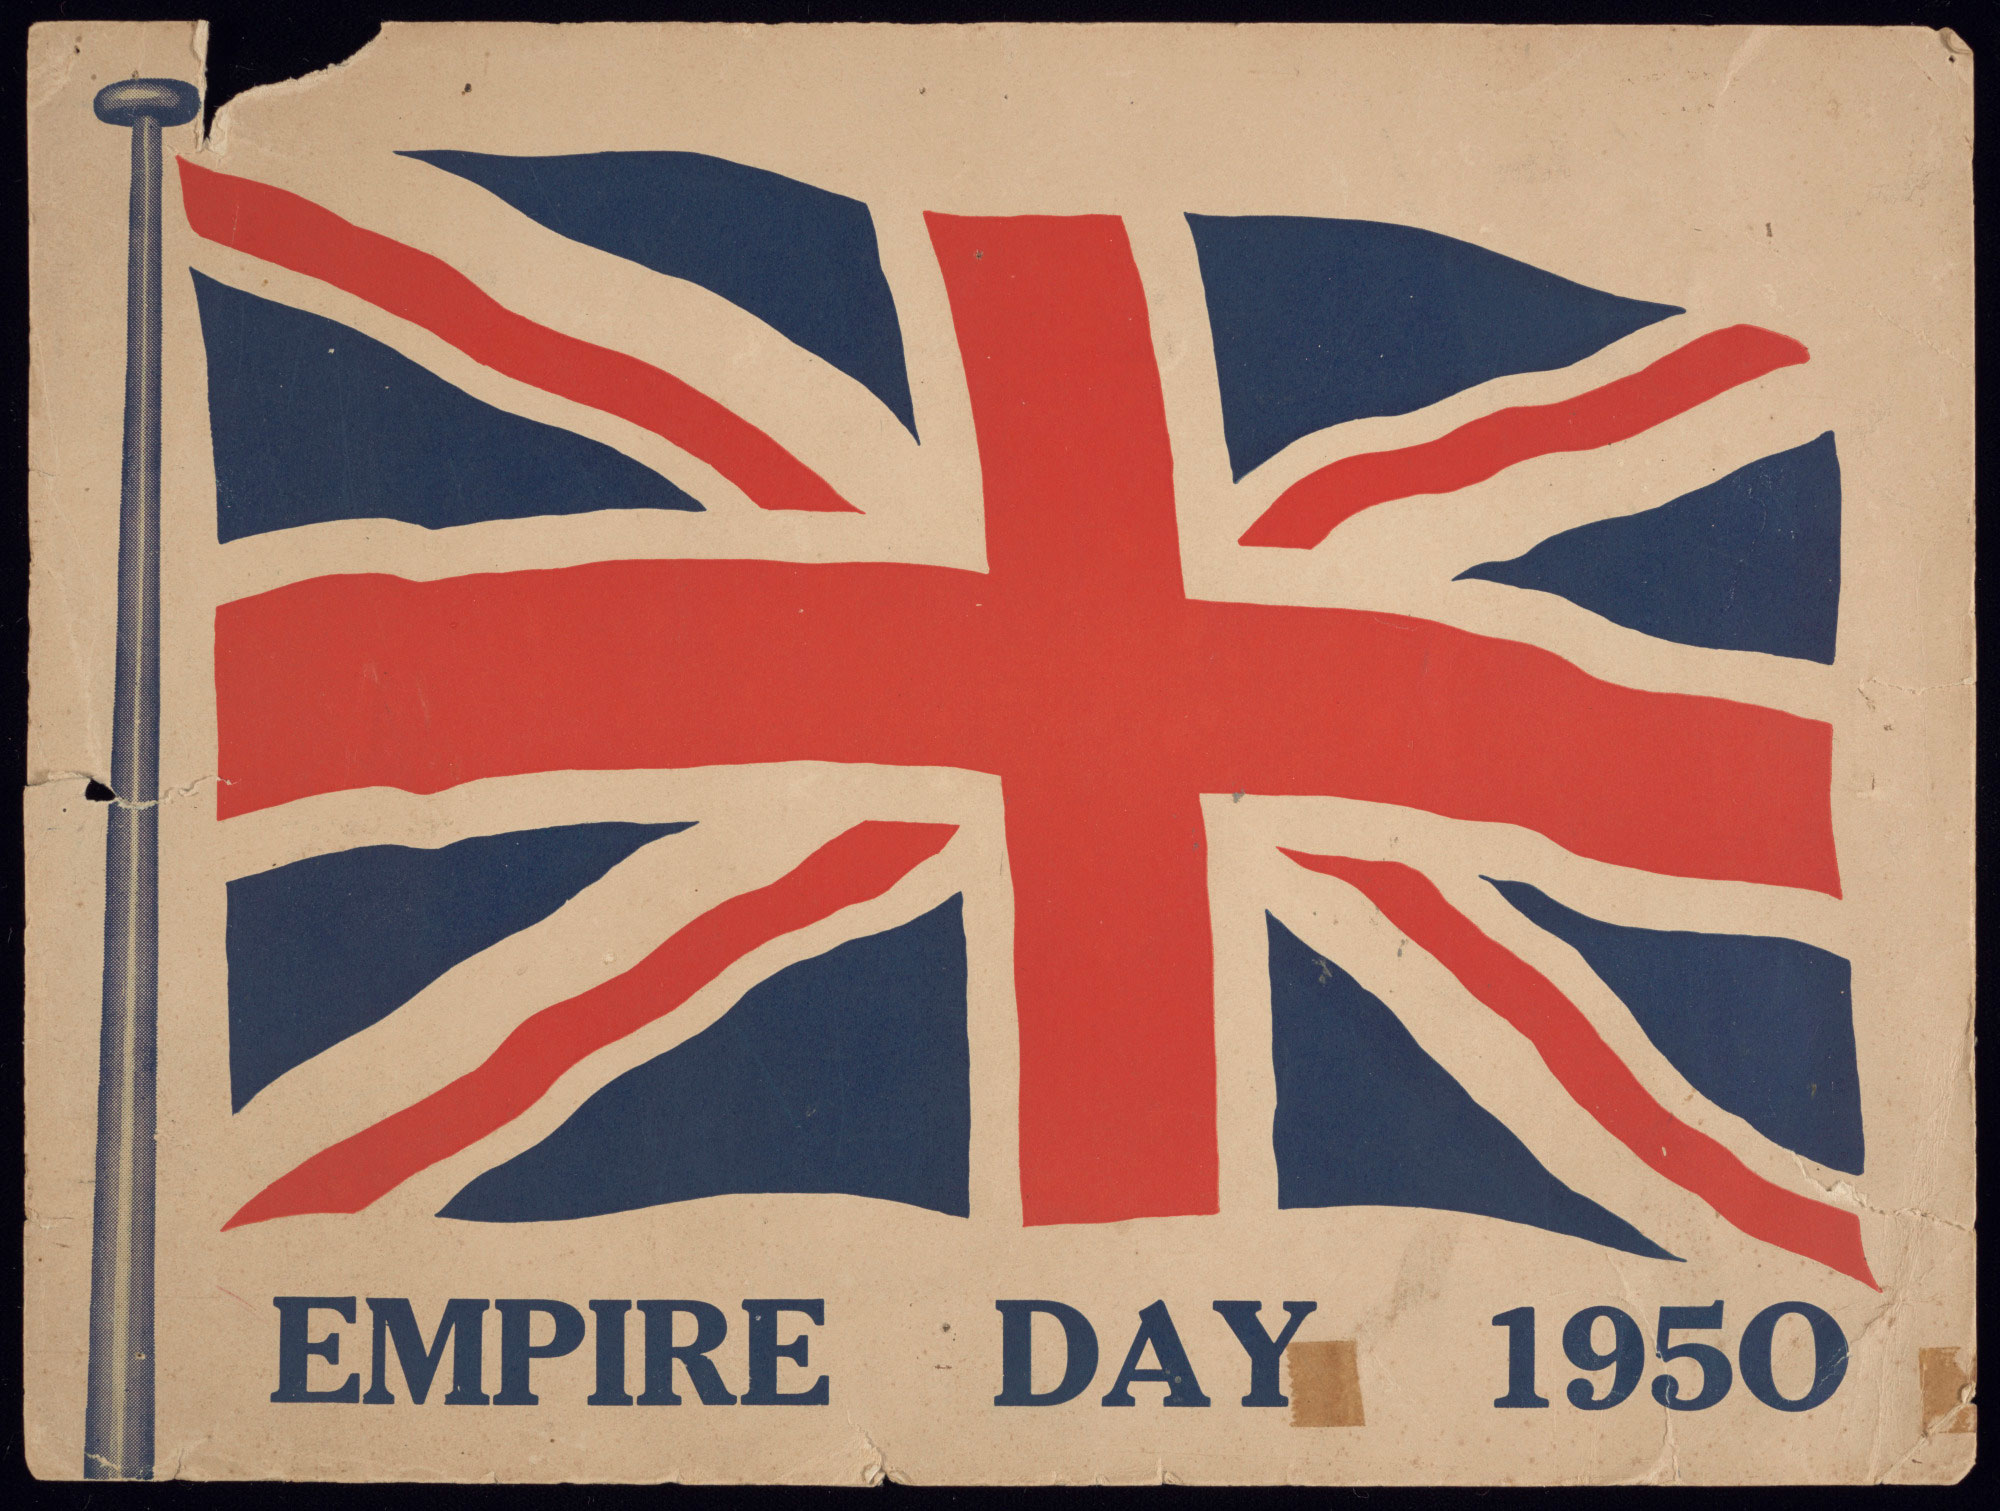 Union Jack 'Empire Day 1950' flag.